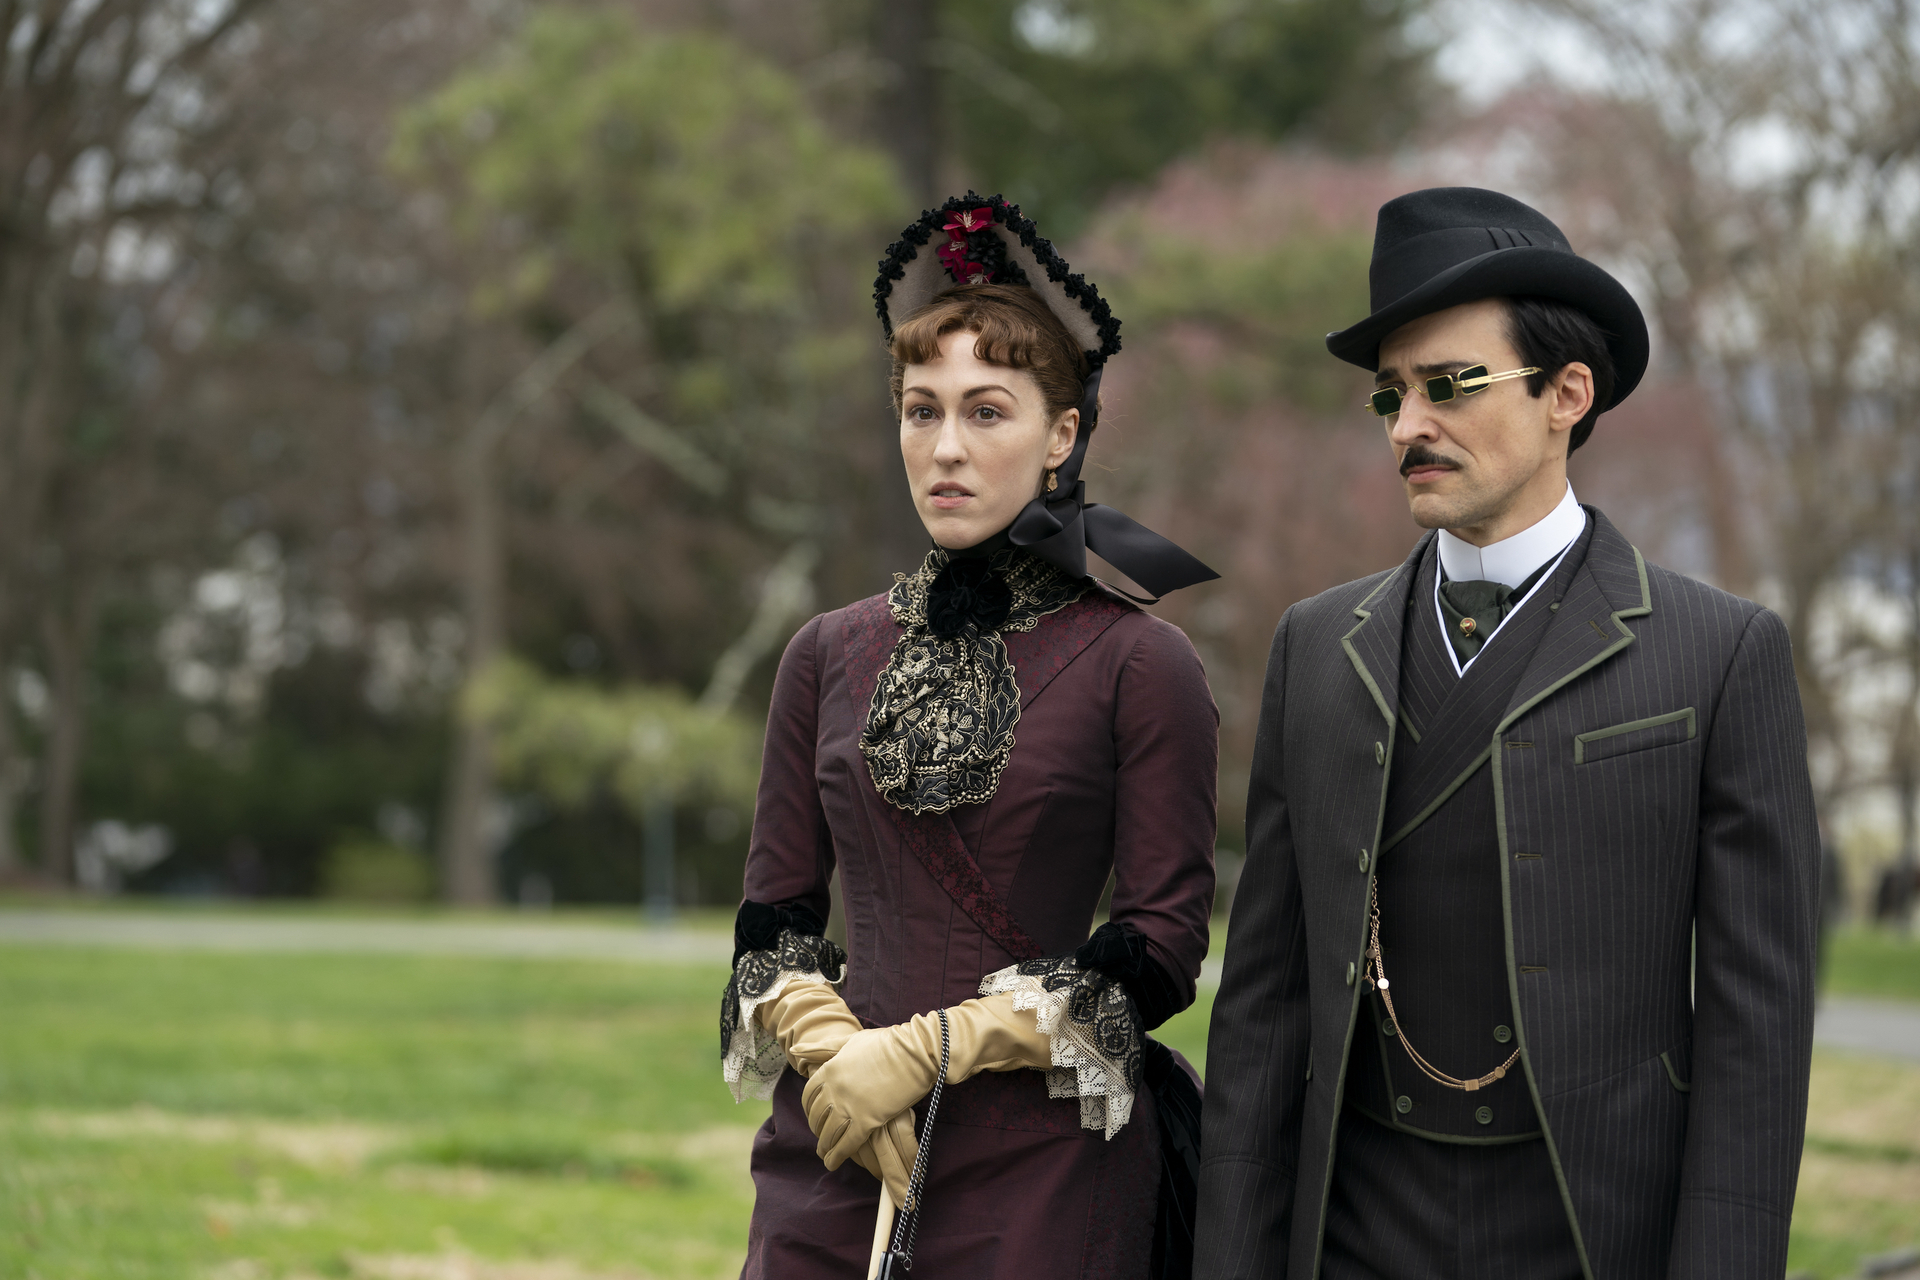 Blake Ritson as Oscar Van Rhijn and Kelly Curran as Turner in season 1 episode 7 of “The Gilded Age.” Cr: Warner Media